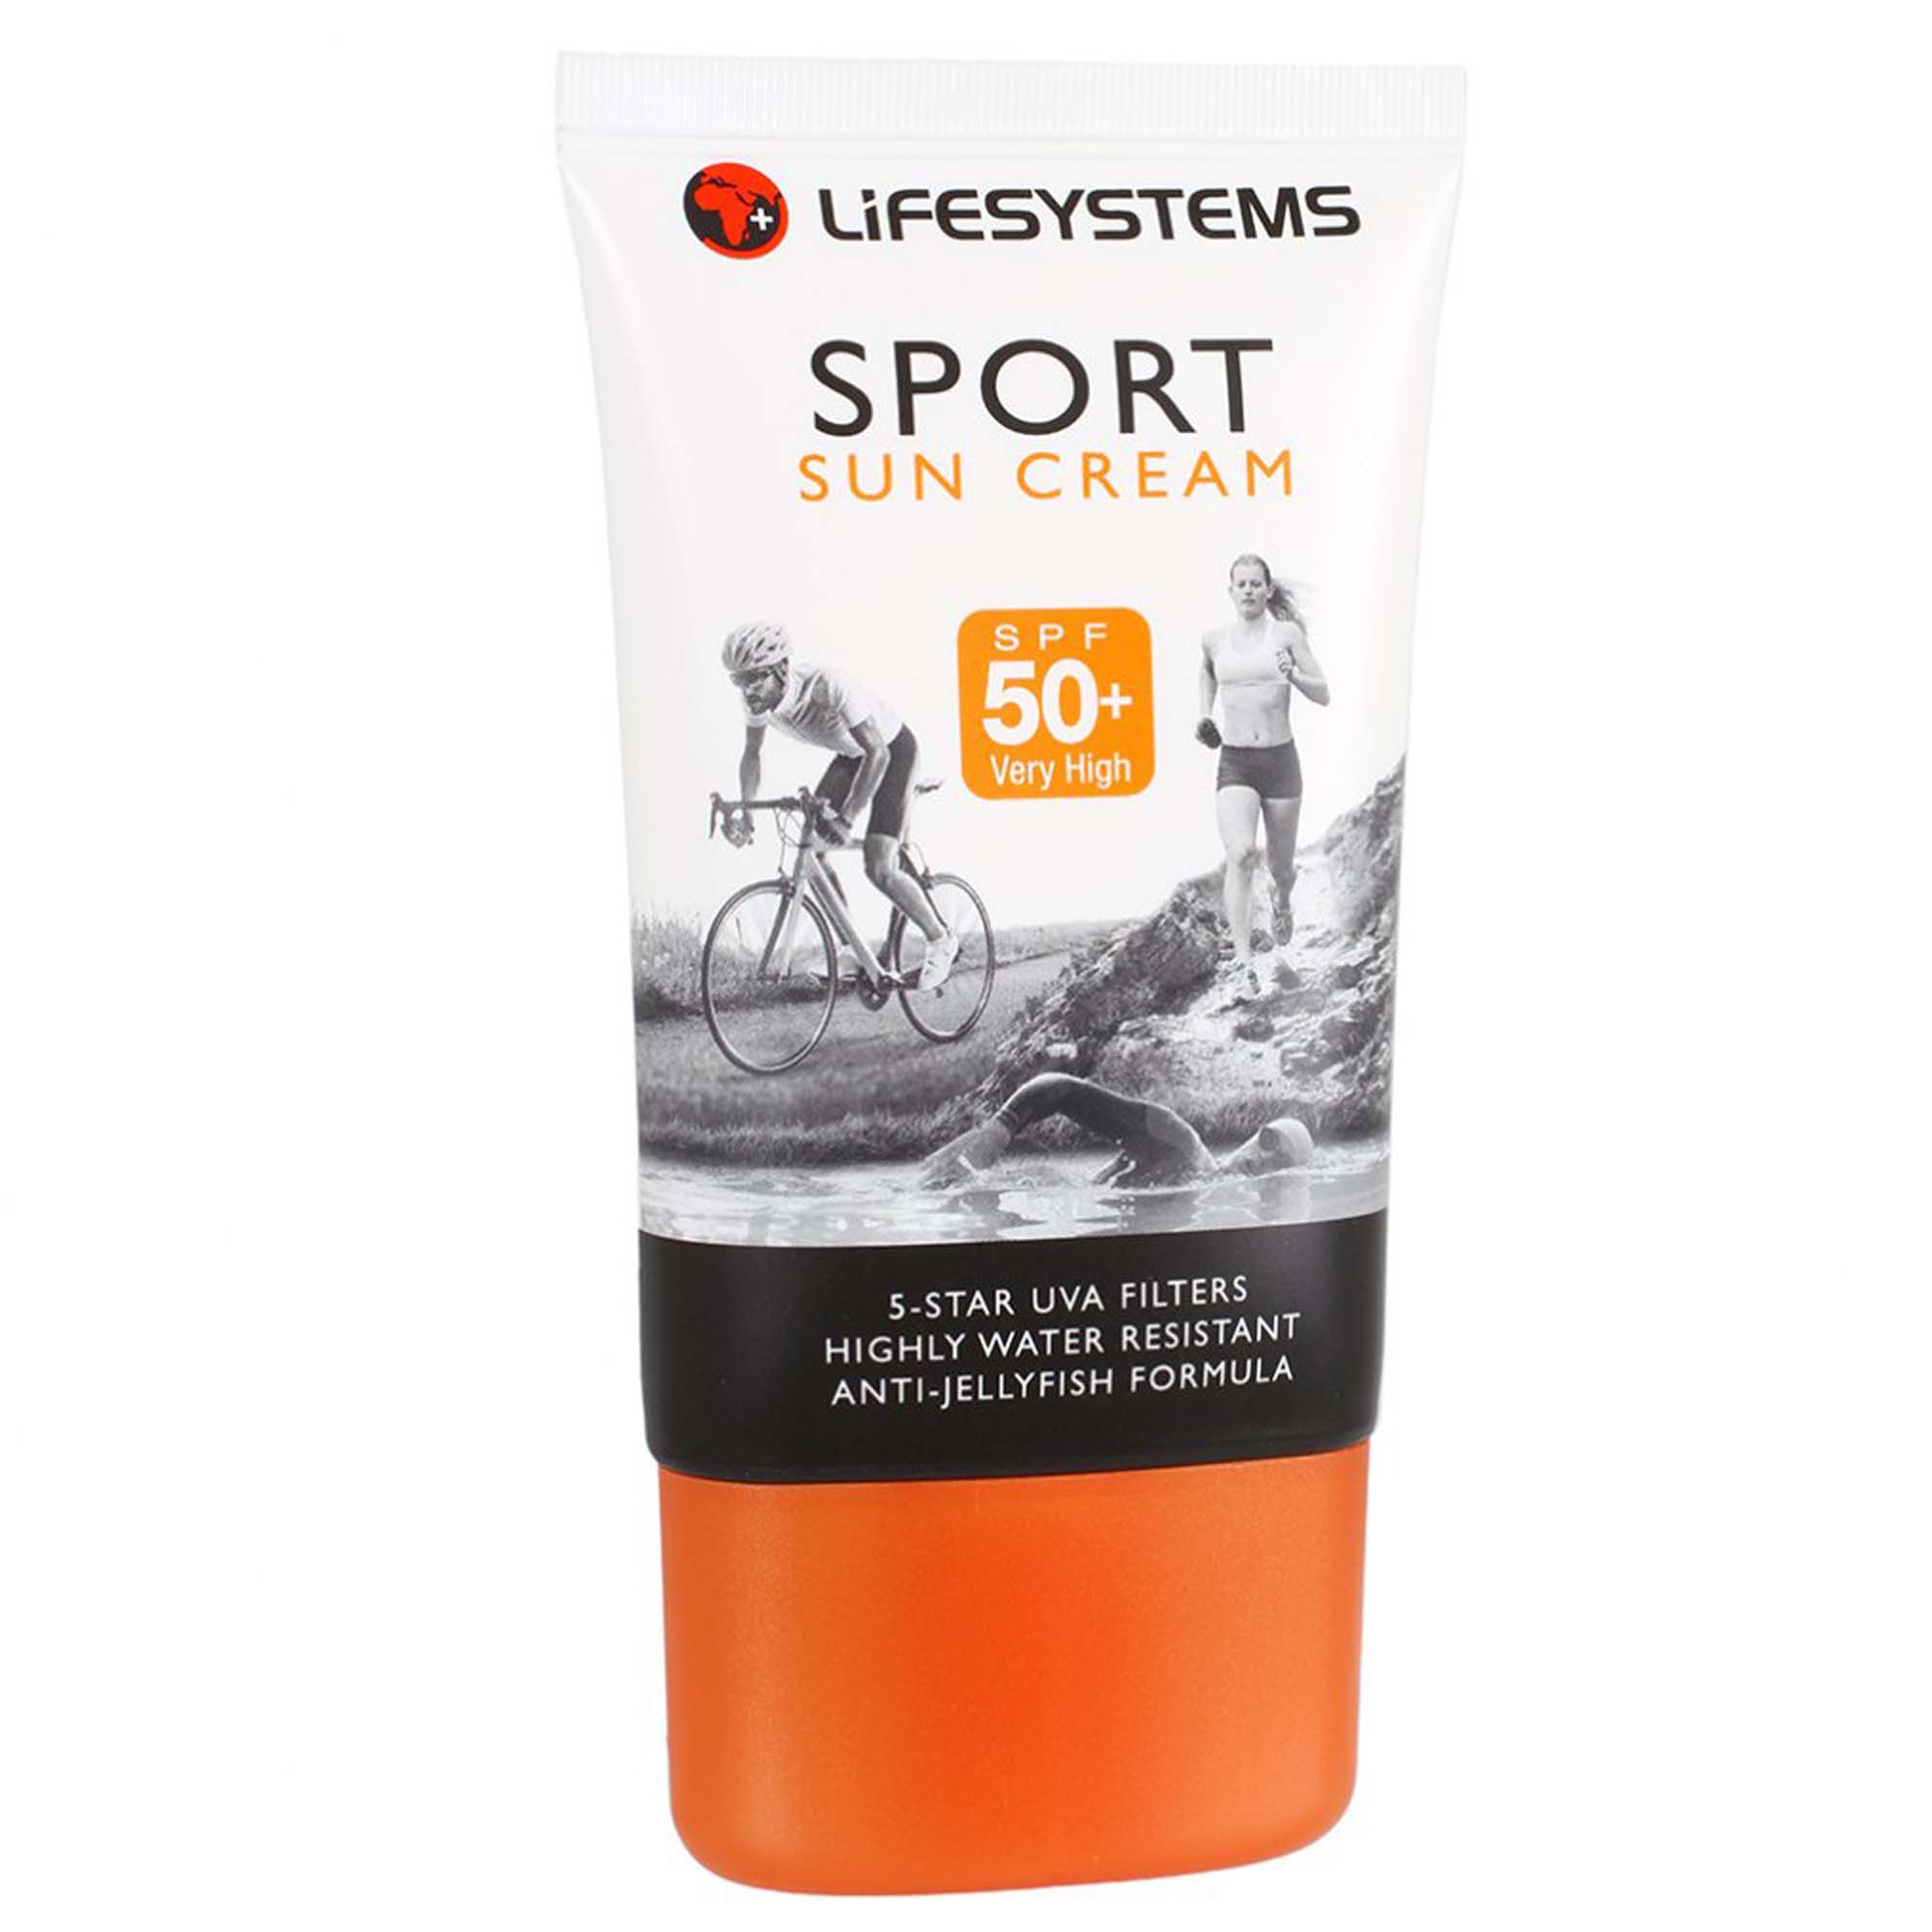 Lifesystems Sport Anti-Jellyfish SPF 50+ Sun Cream